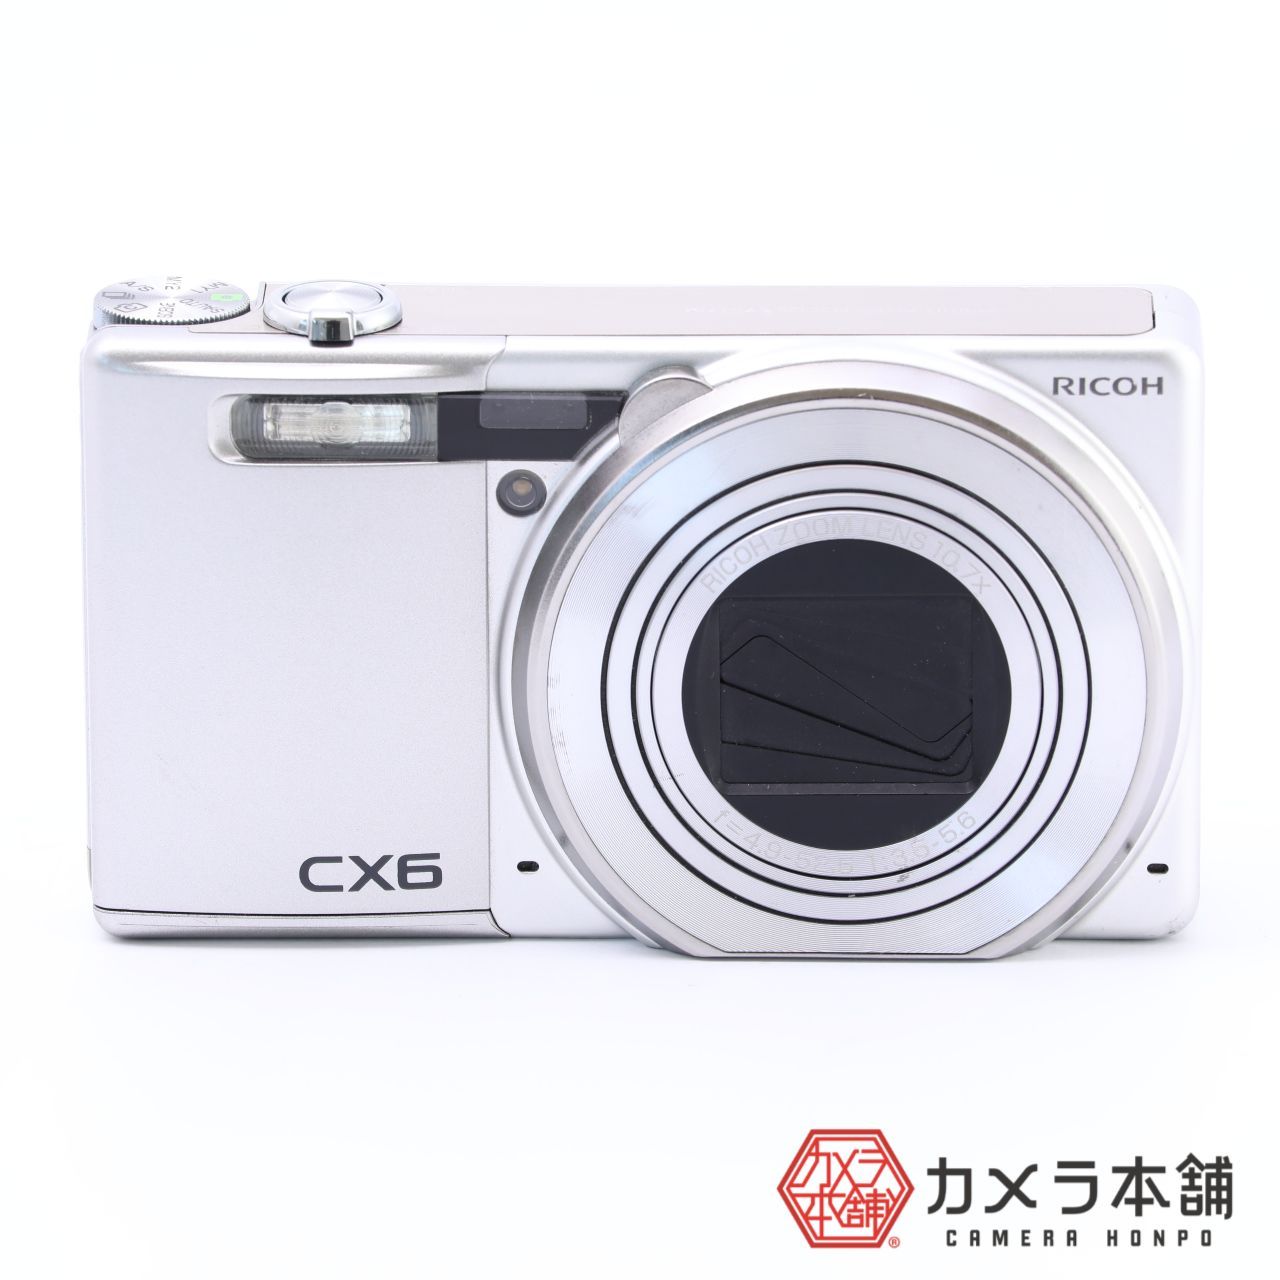 RICOH リコー デジタルカメラ CX6 シルバー CX6-SL